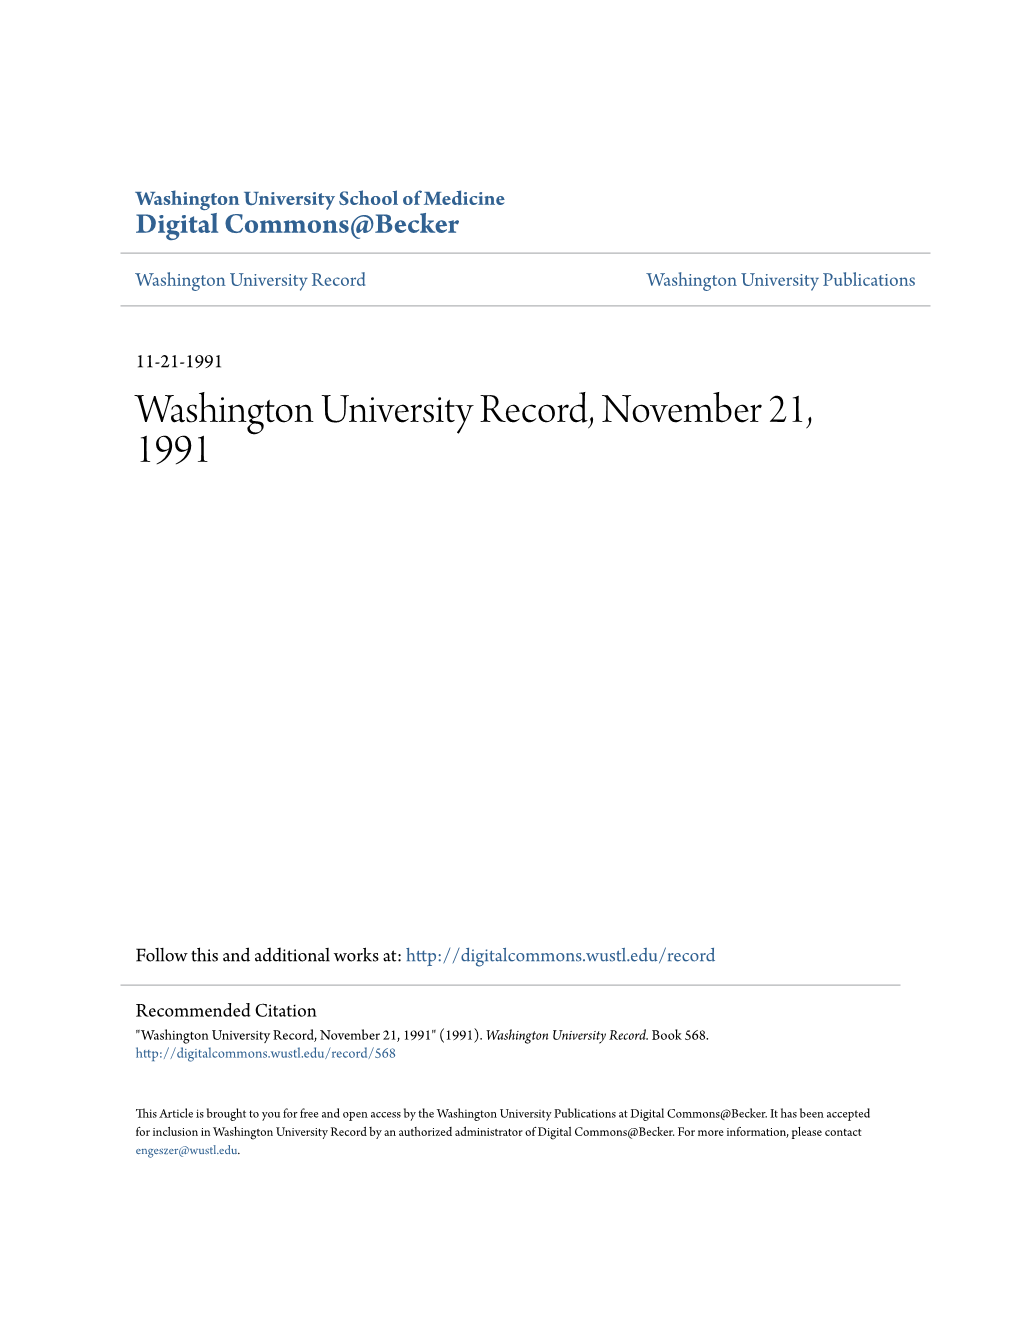 Washington University Record, November 21, 1991